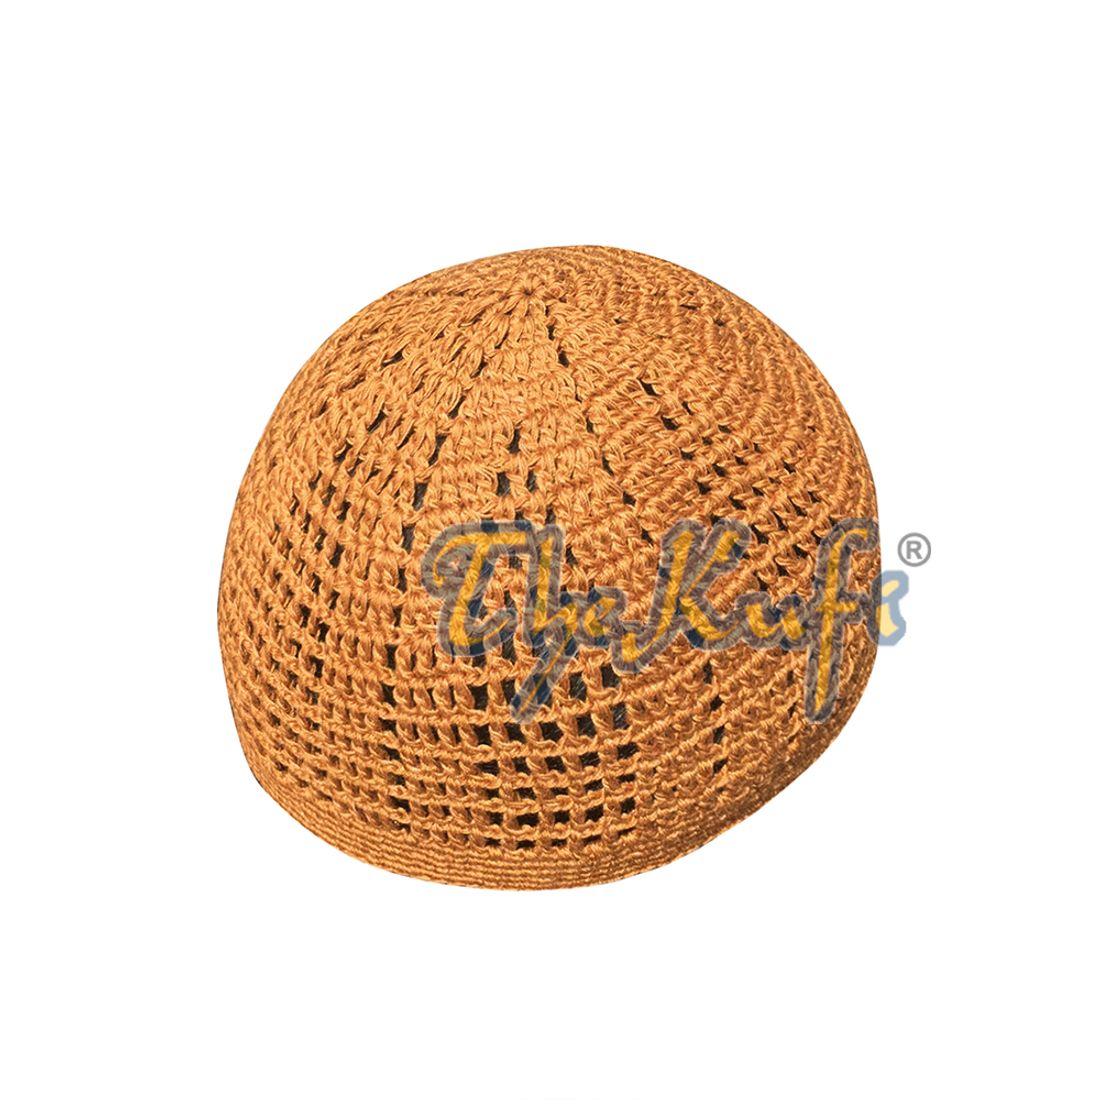 Skull Cap Kufi Cotton Rust Brown Tight & Loose Weave Design Crochet Knit Head Cover